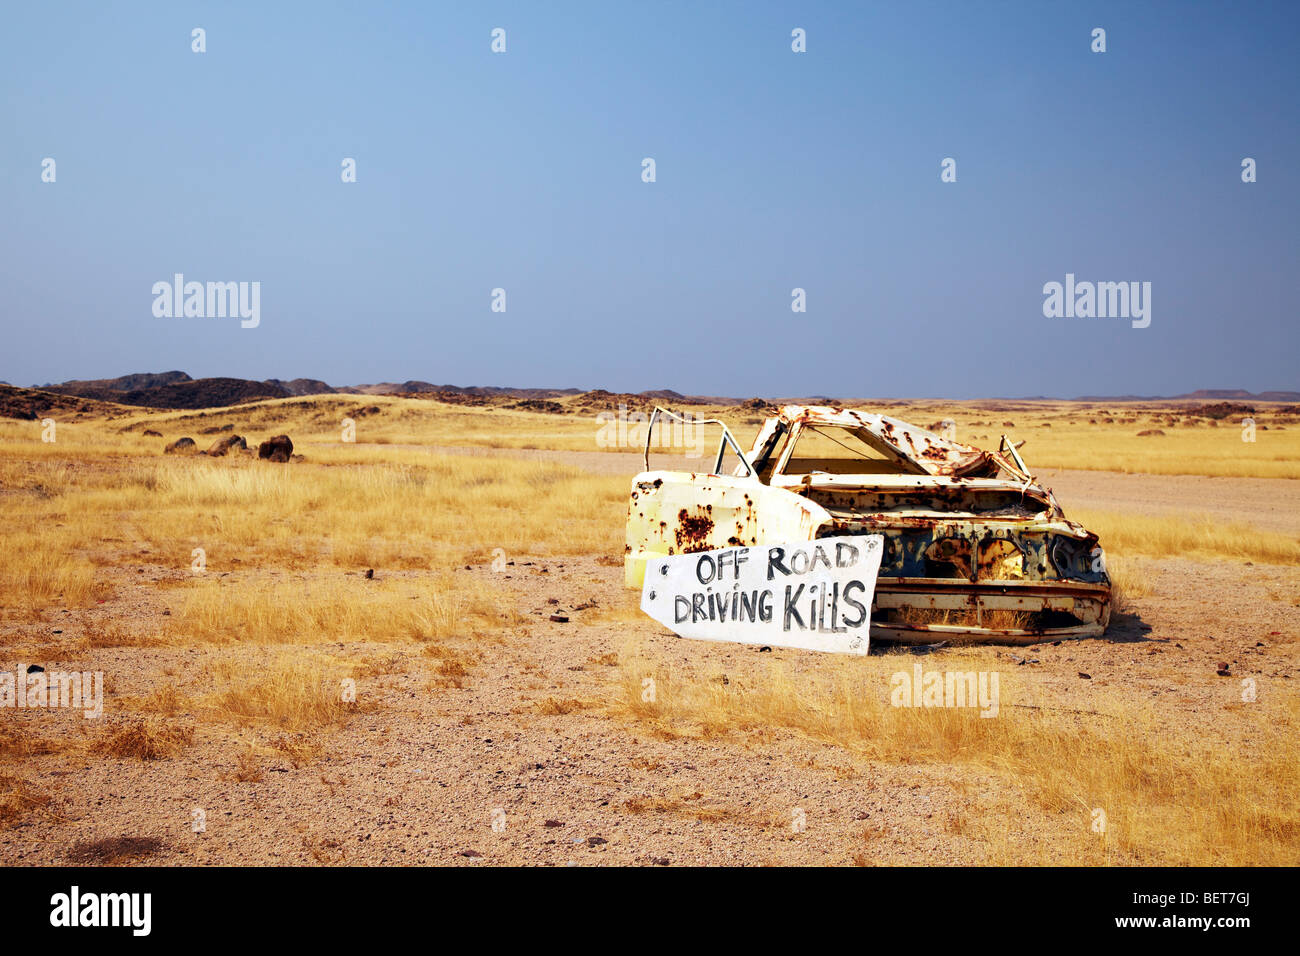 off road driving kills sign, Namibia Stock Photo